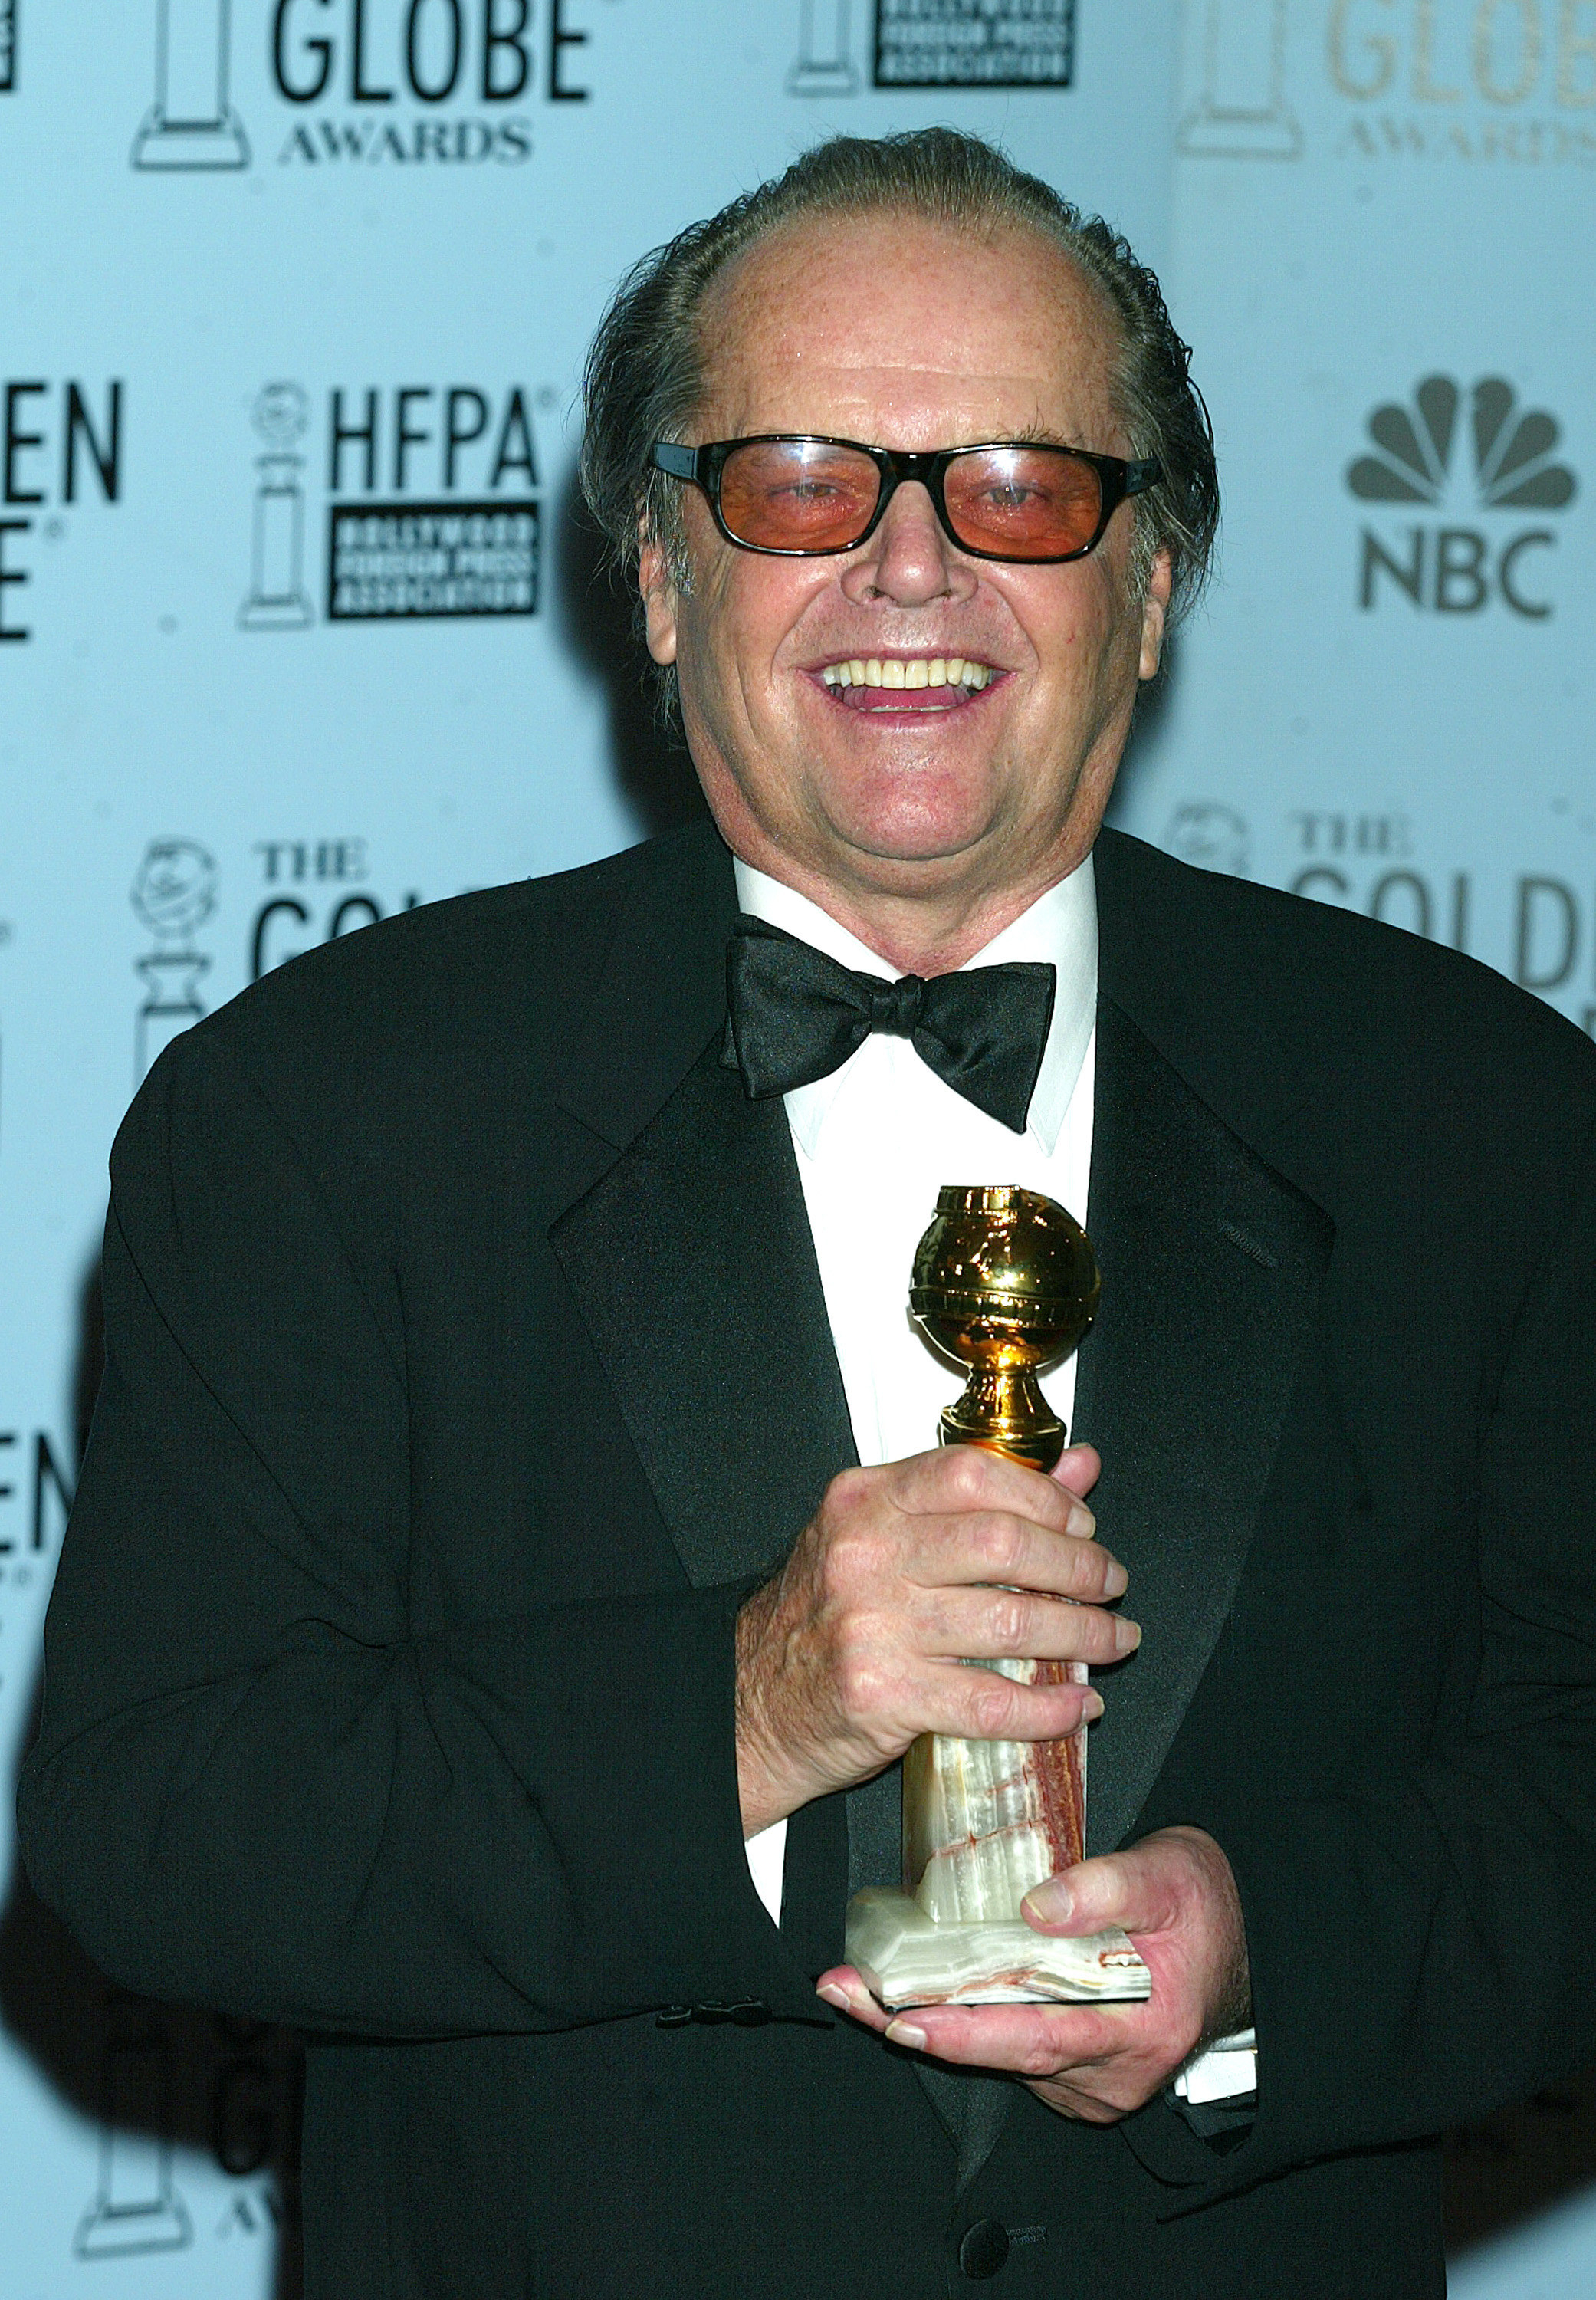 Jack Nicholson holding a Golden Globe award